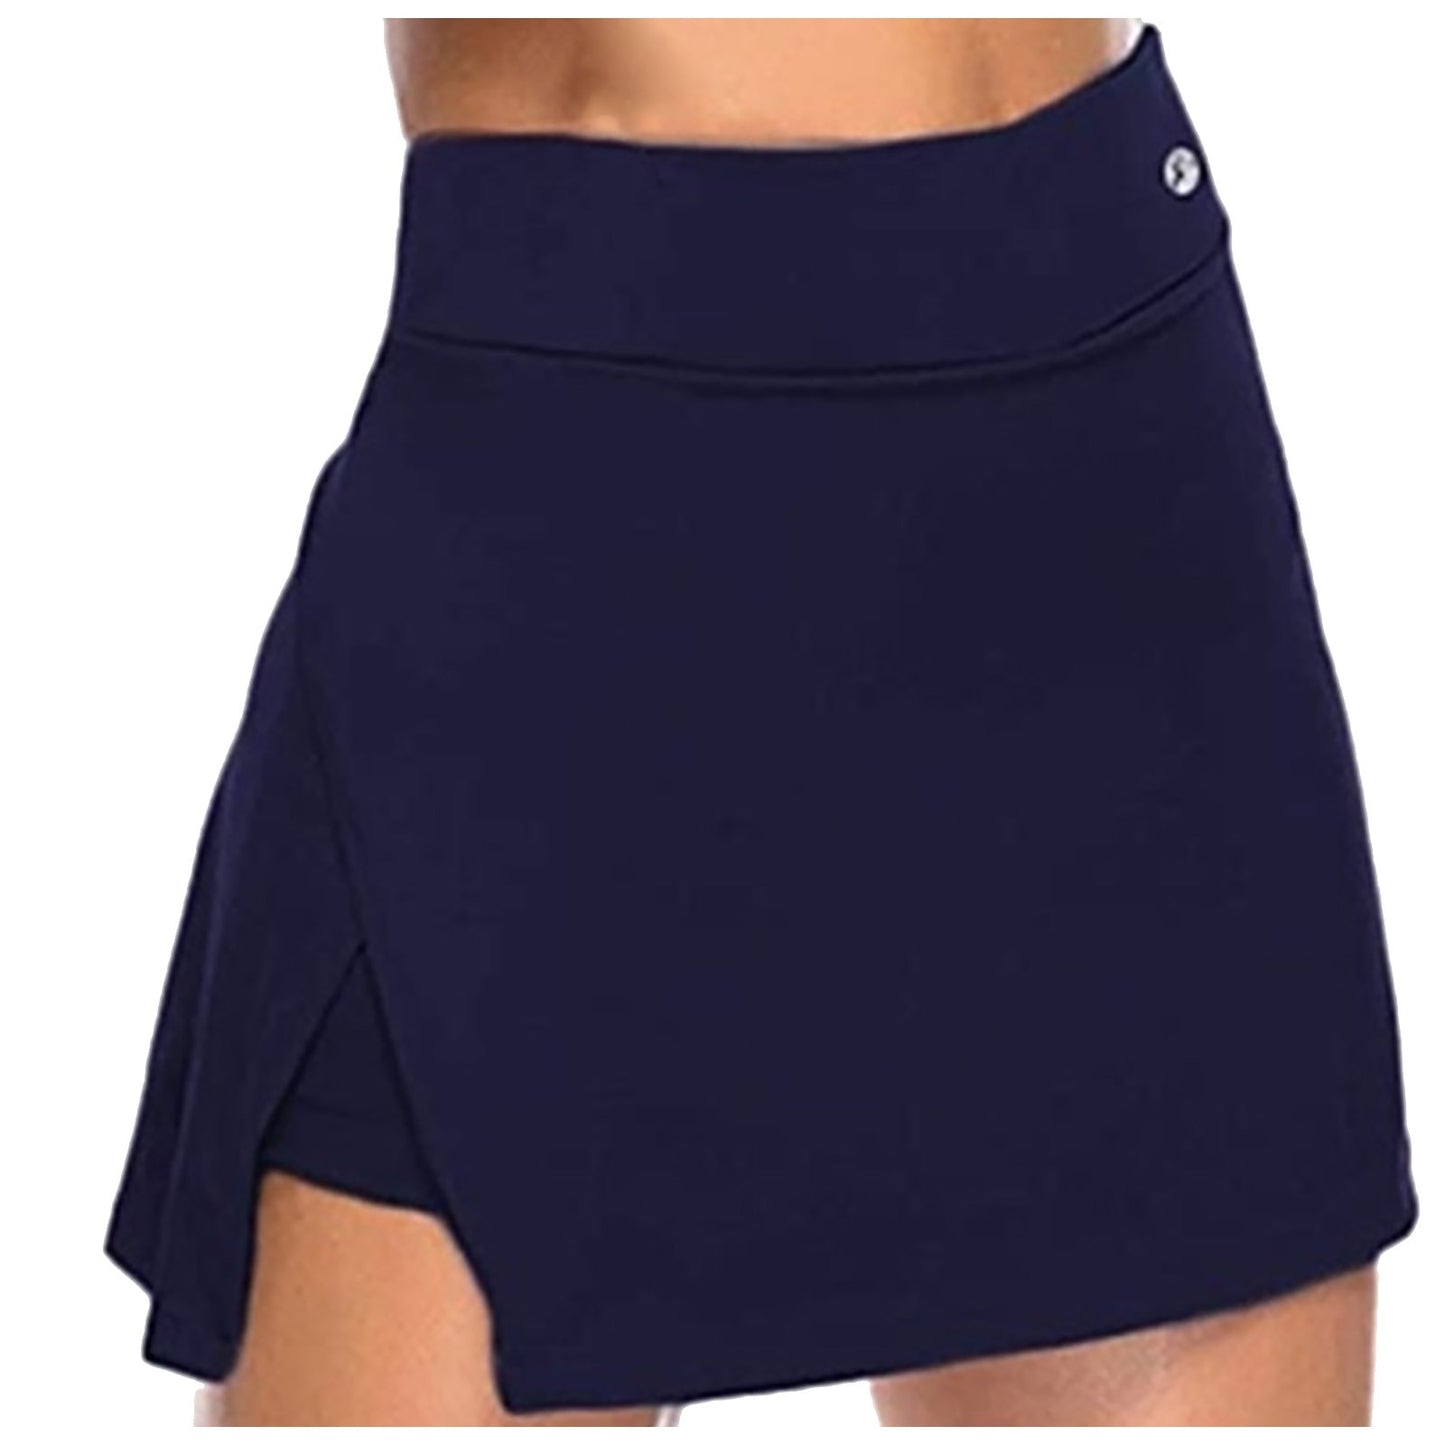 Women‘s Running Shorts, Tennis/Golf Shorts, Gym Shorts